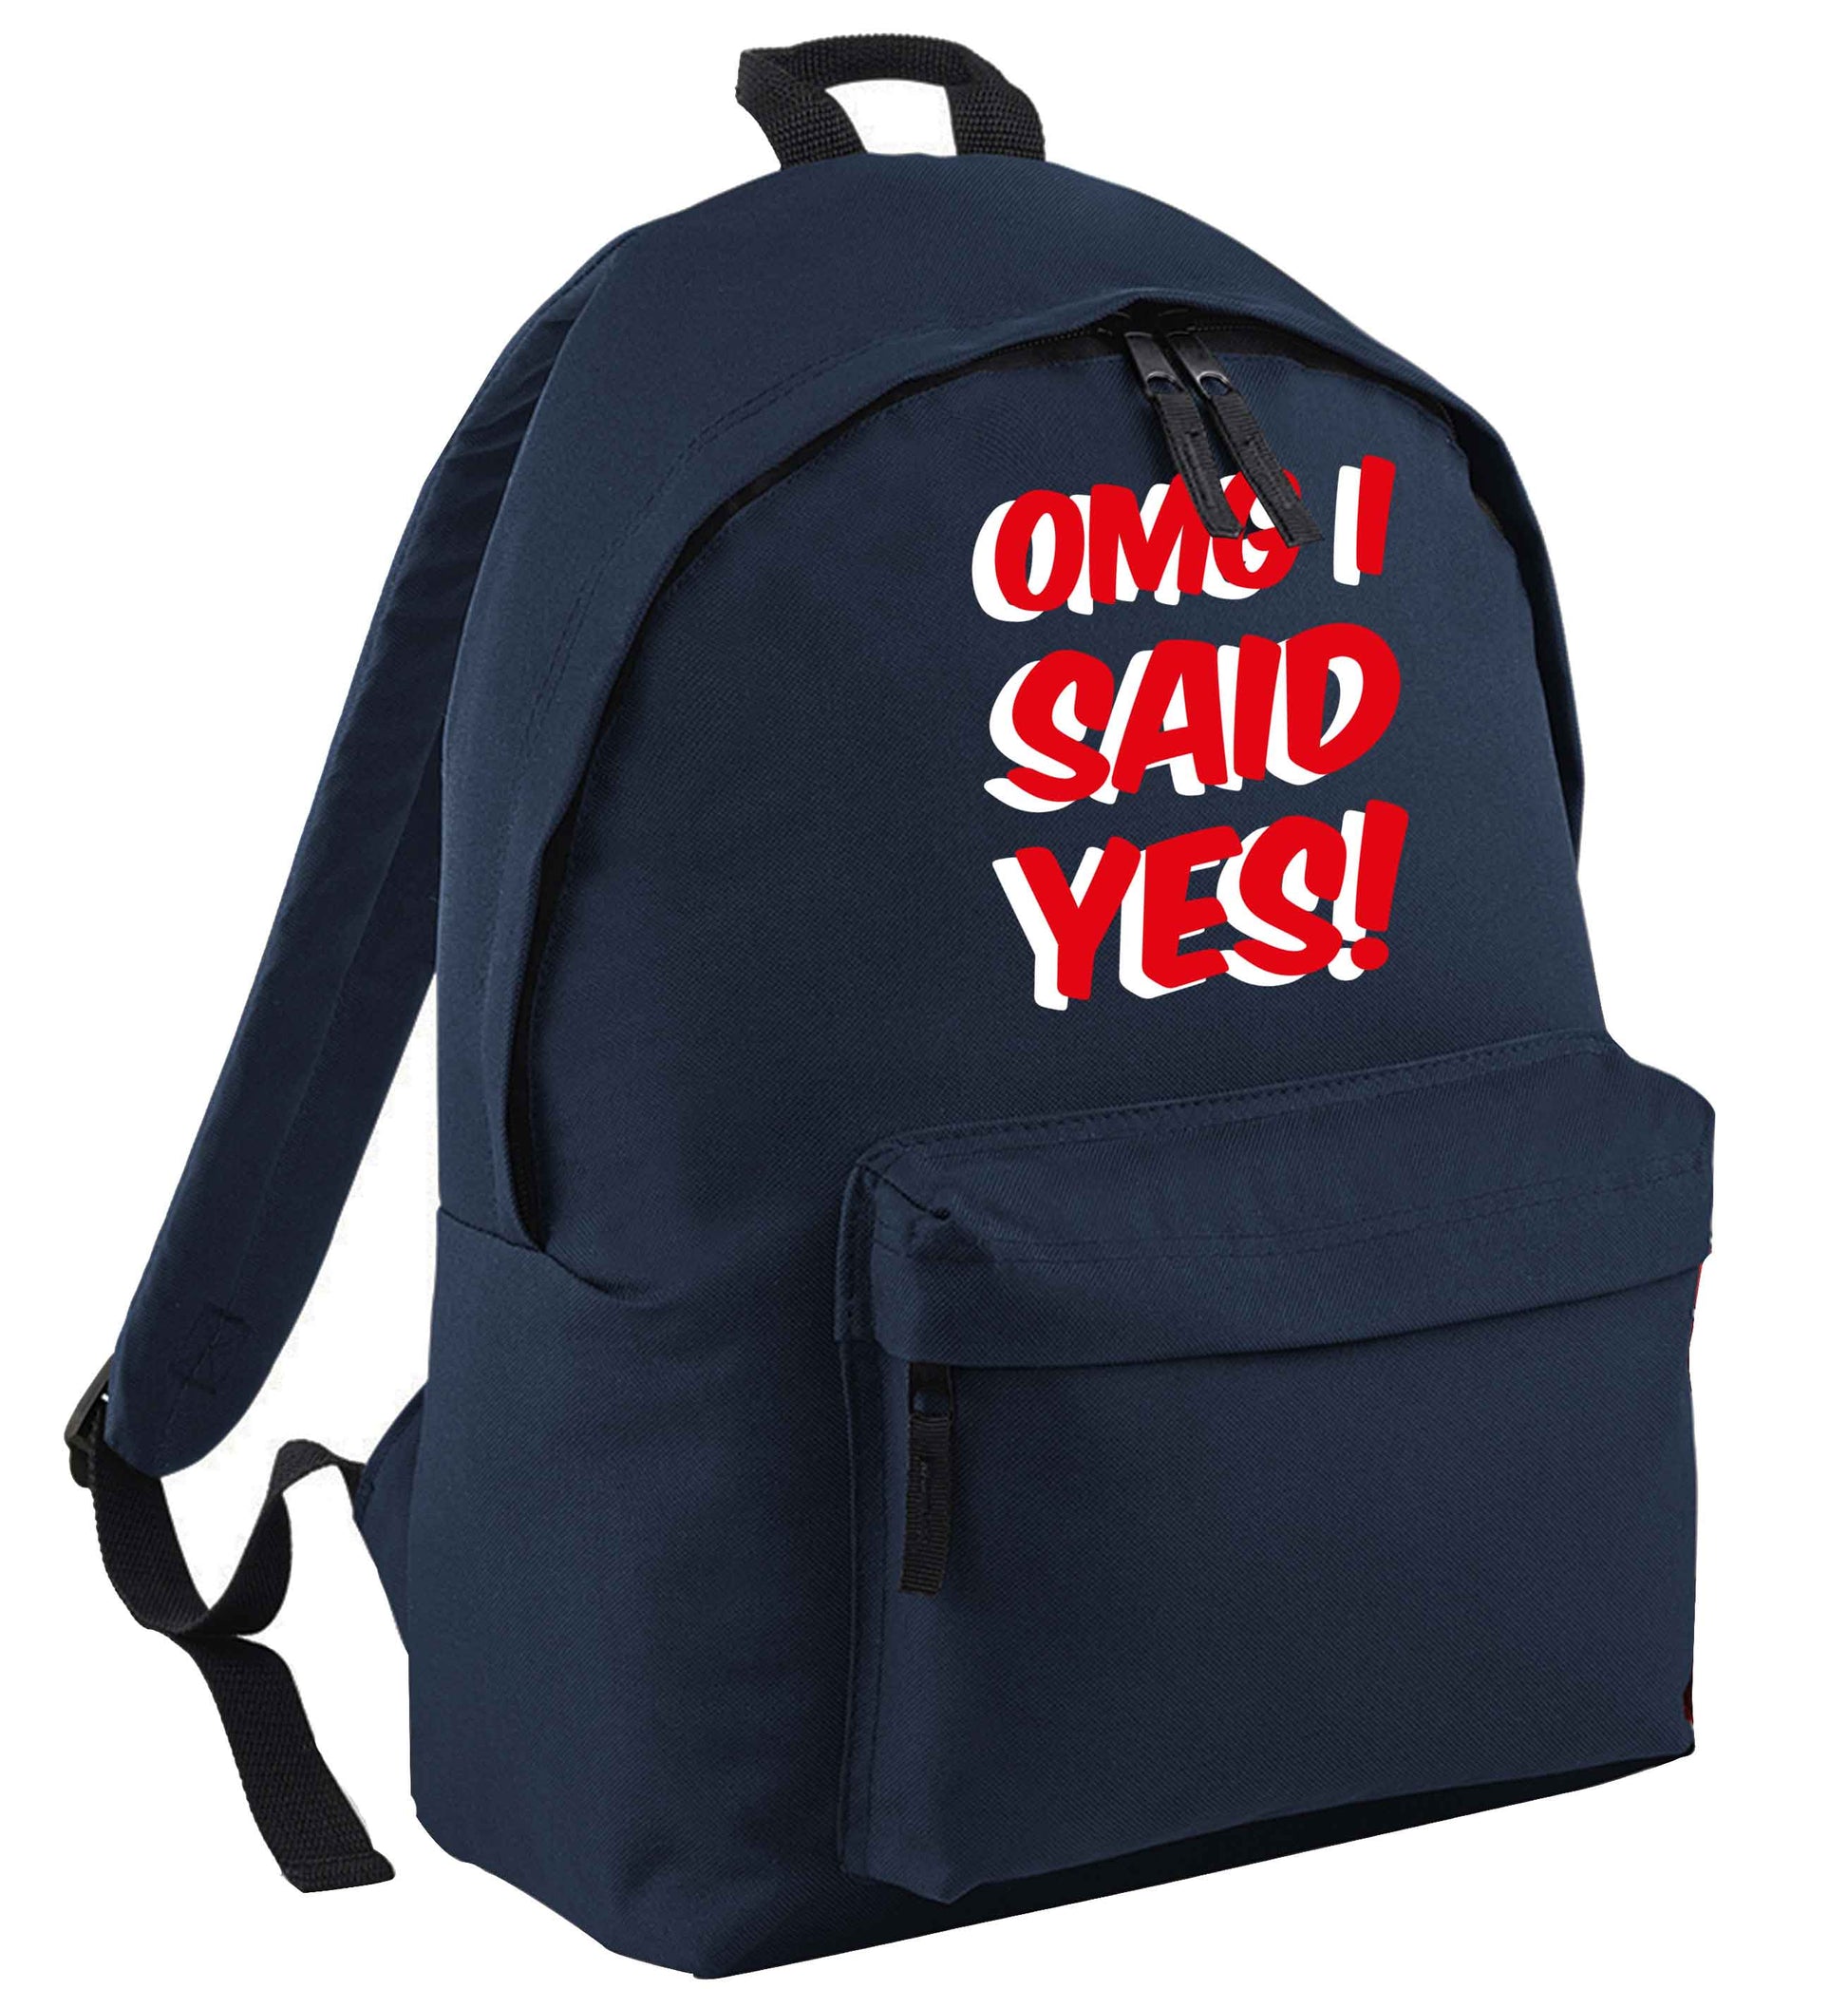 Omg I said yes navy adults backpack